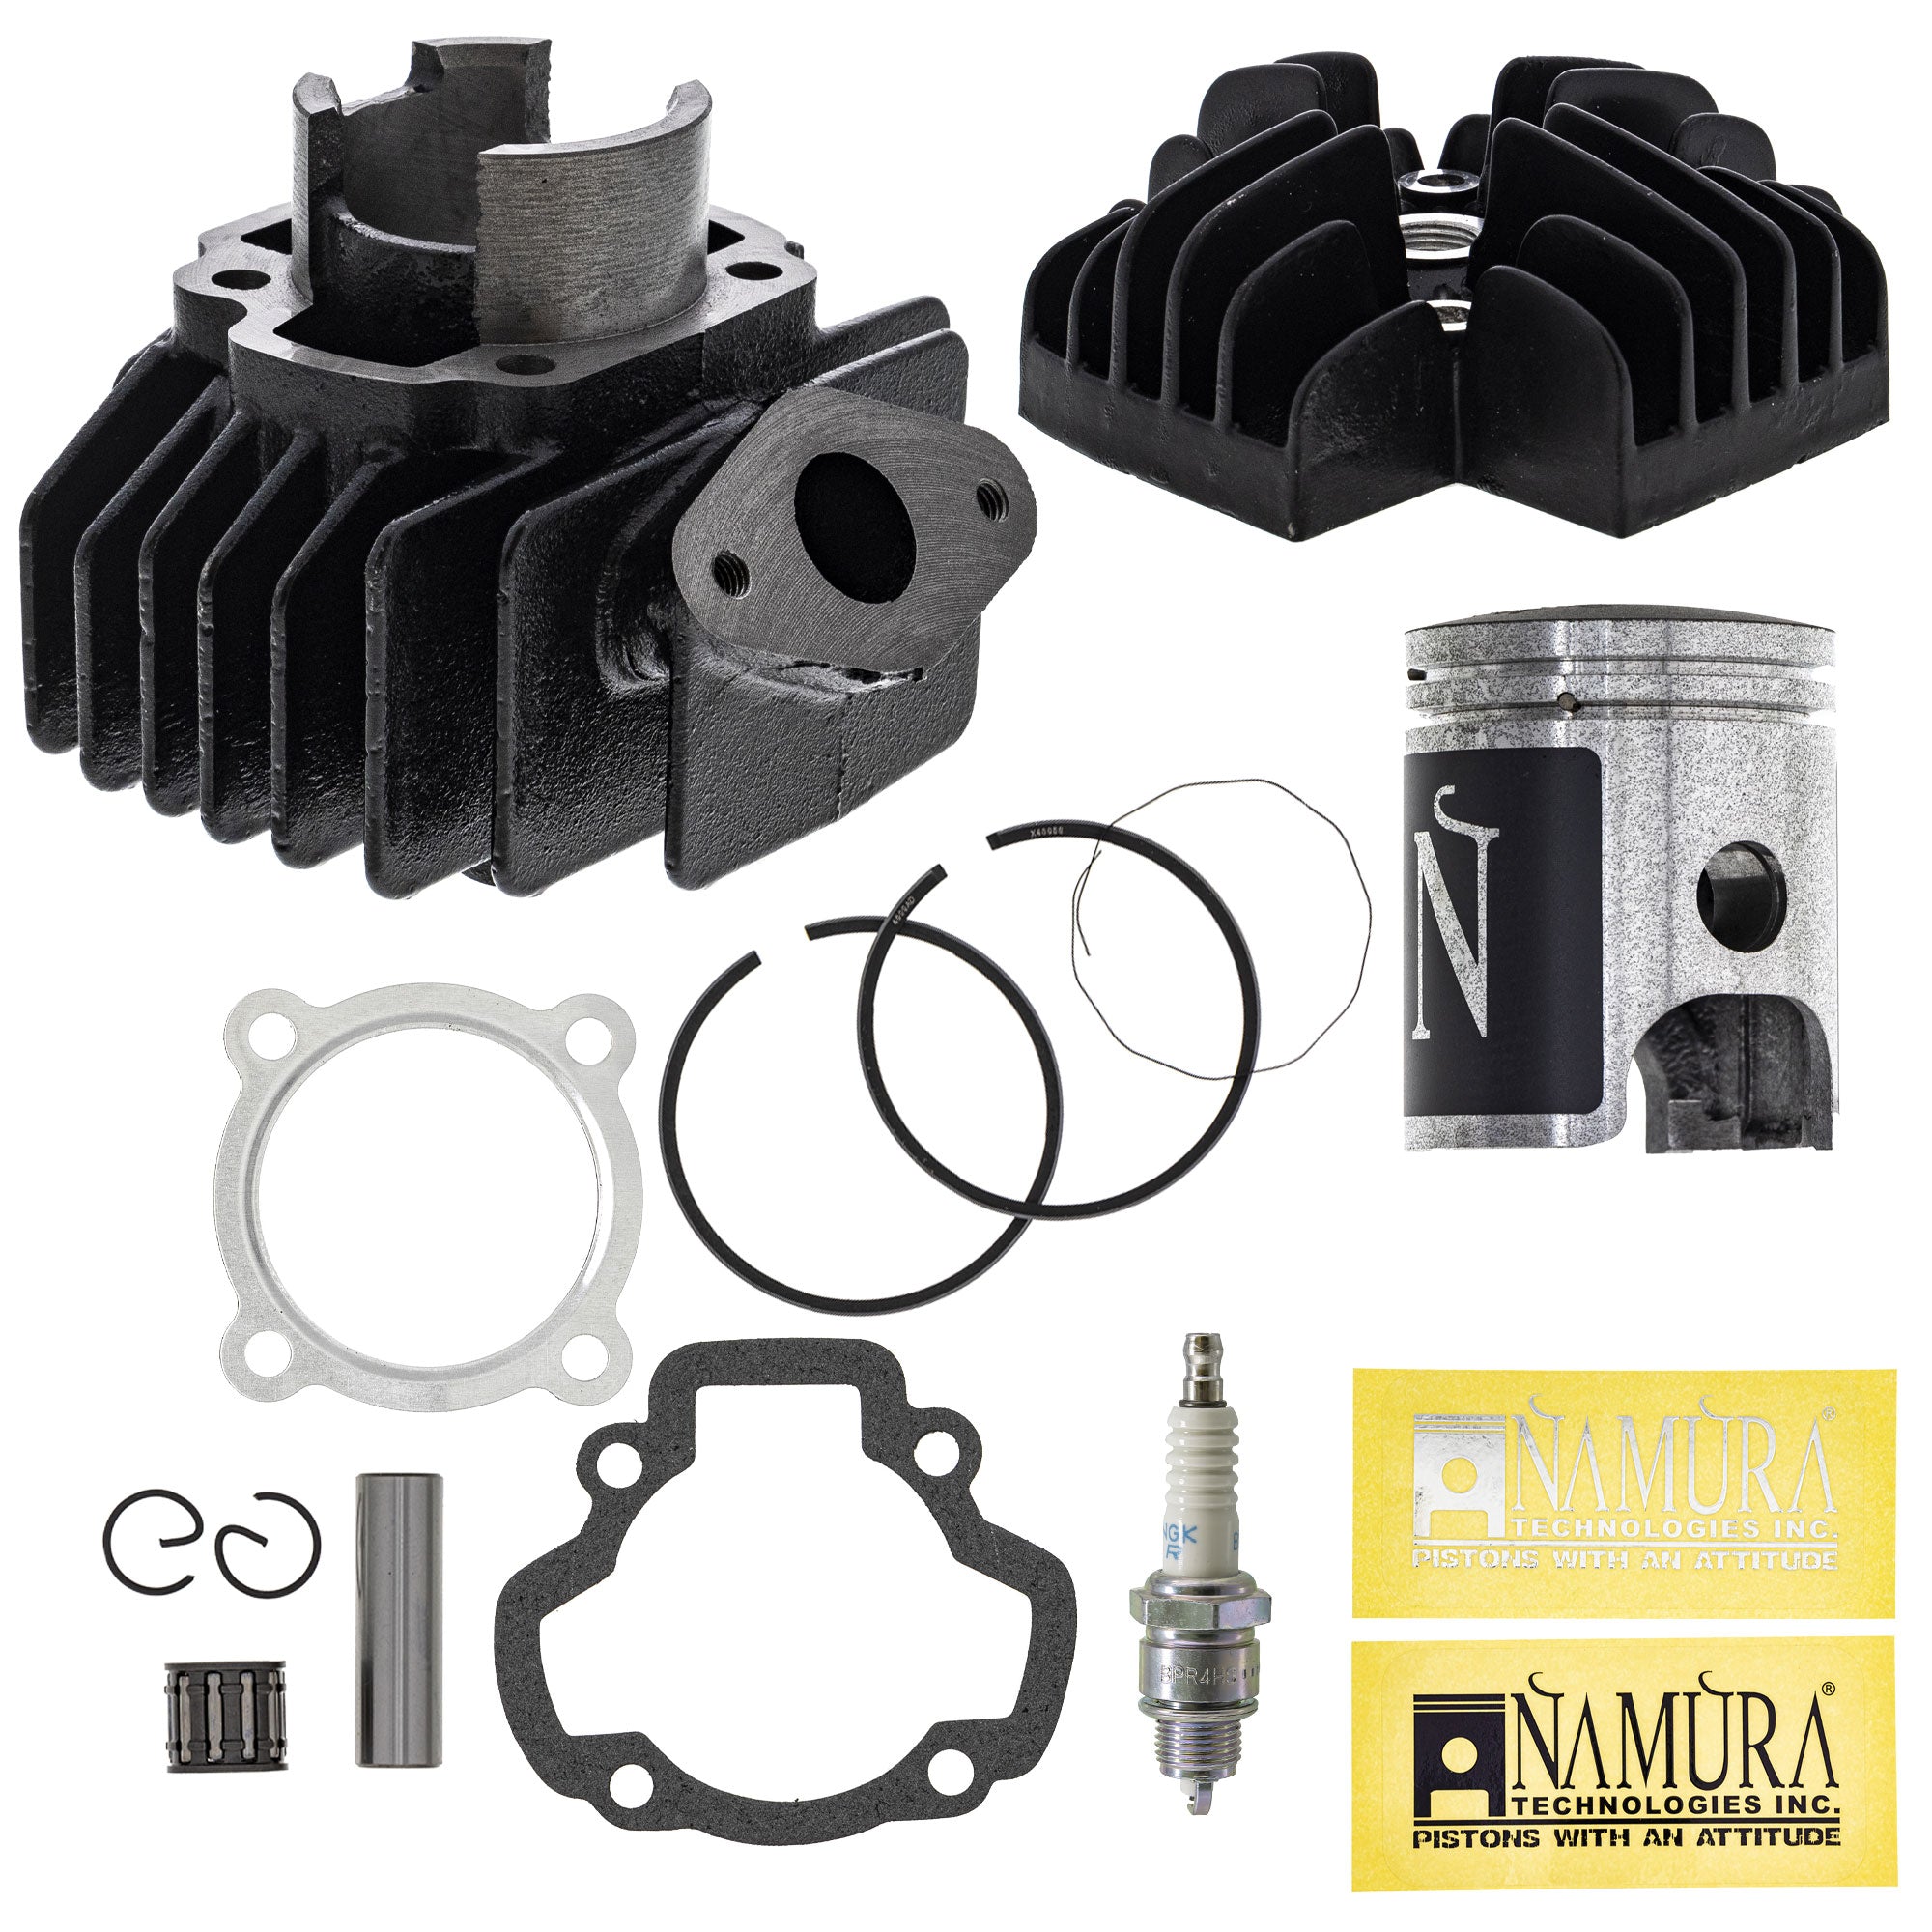 Cylinder Namura Piston Cylinder Head Gasket Spark Plug Kit for PW50 NICHE MK1012523